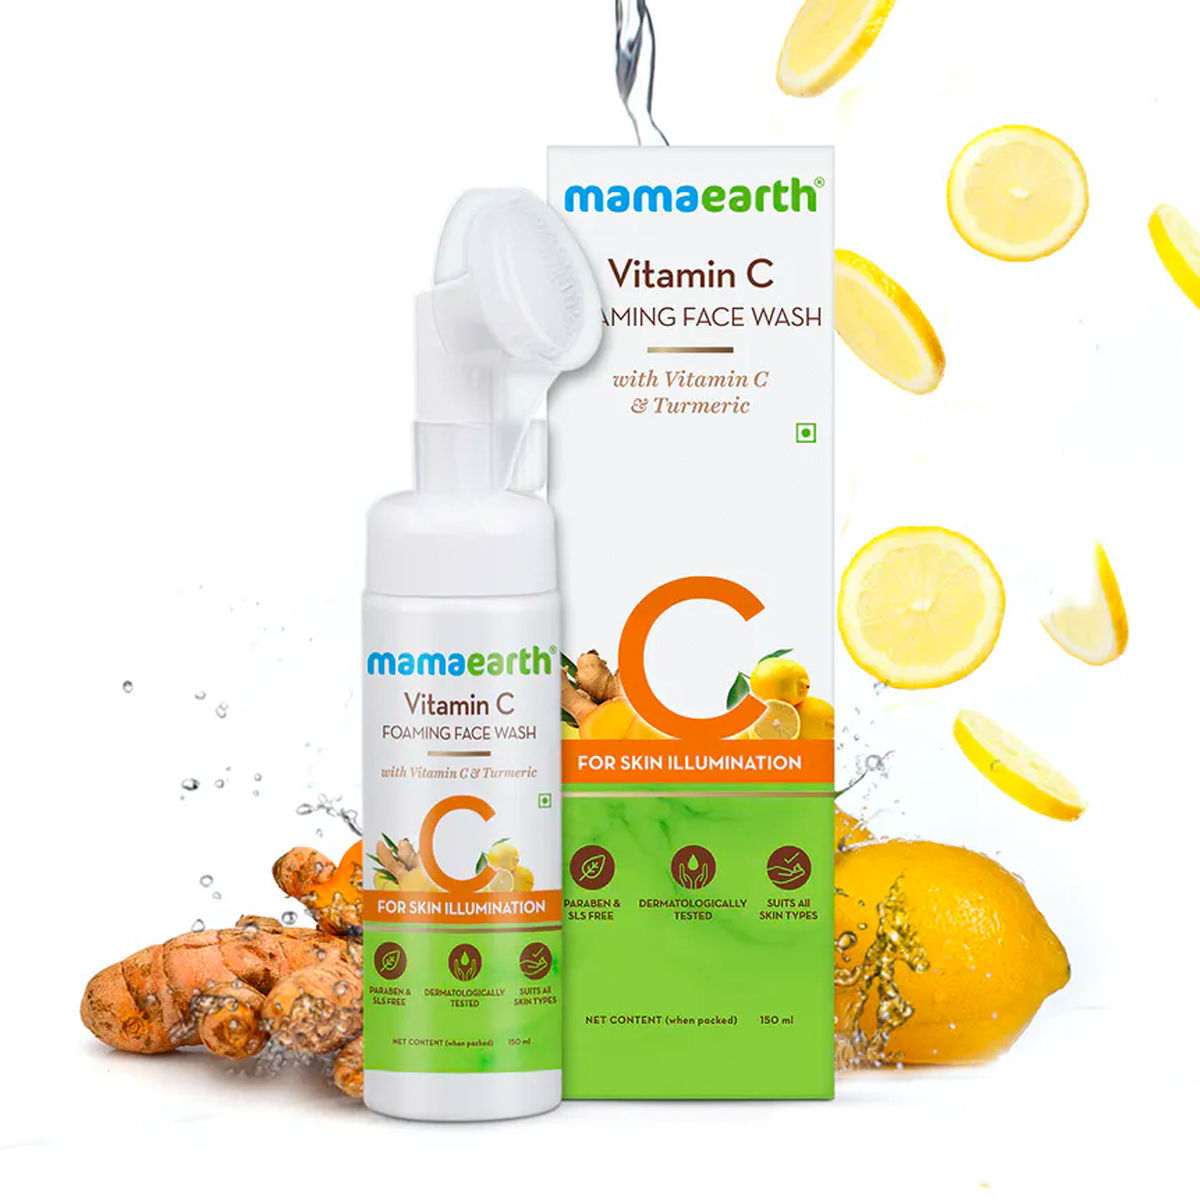 Mamaearth Vitamin C Foaming Face Wash with Vitamin C & Turmeric